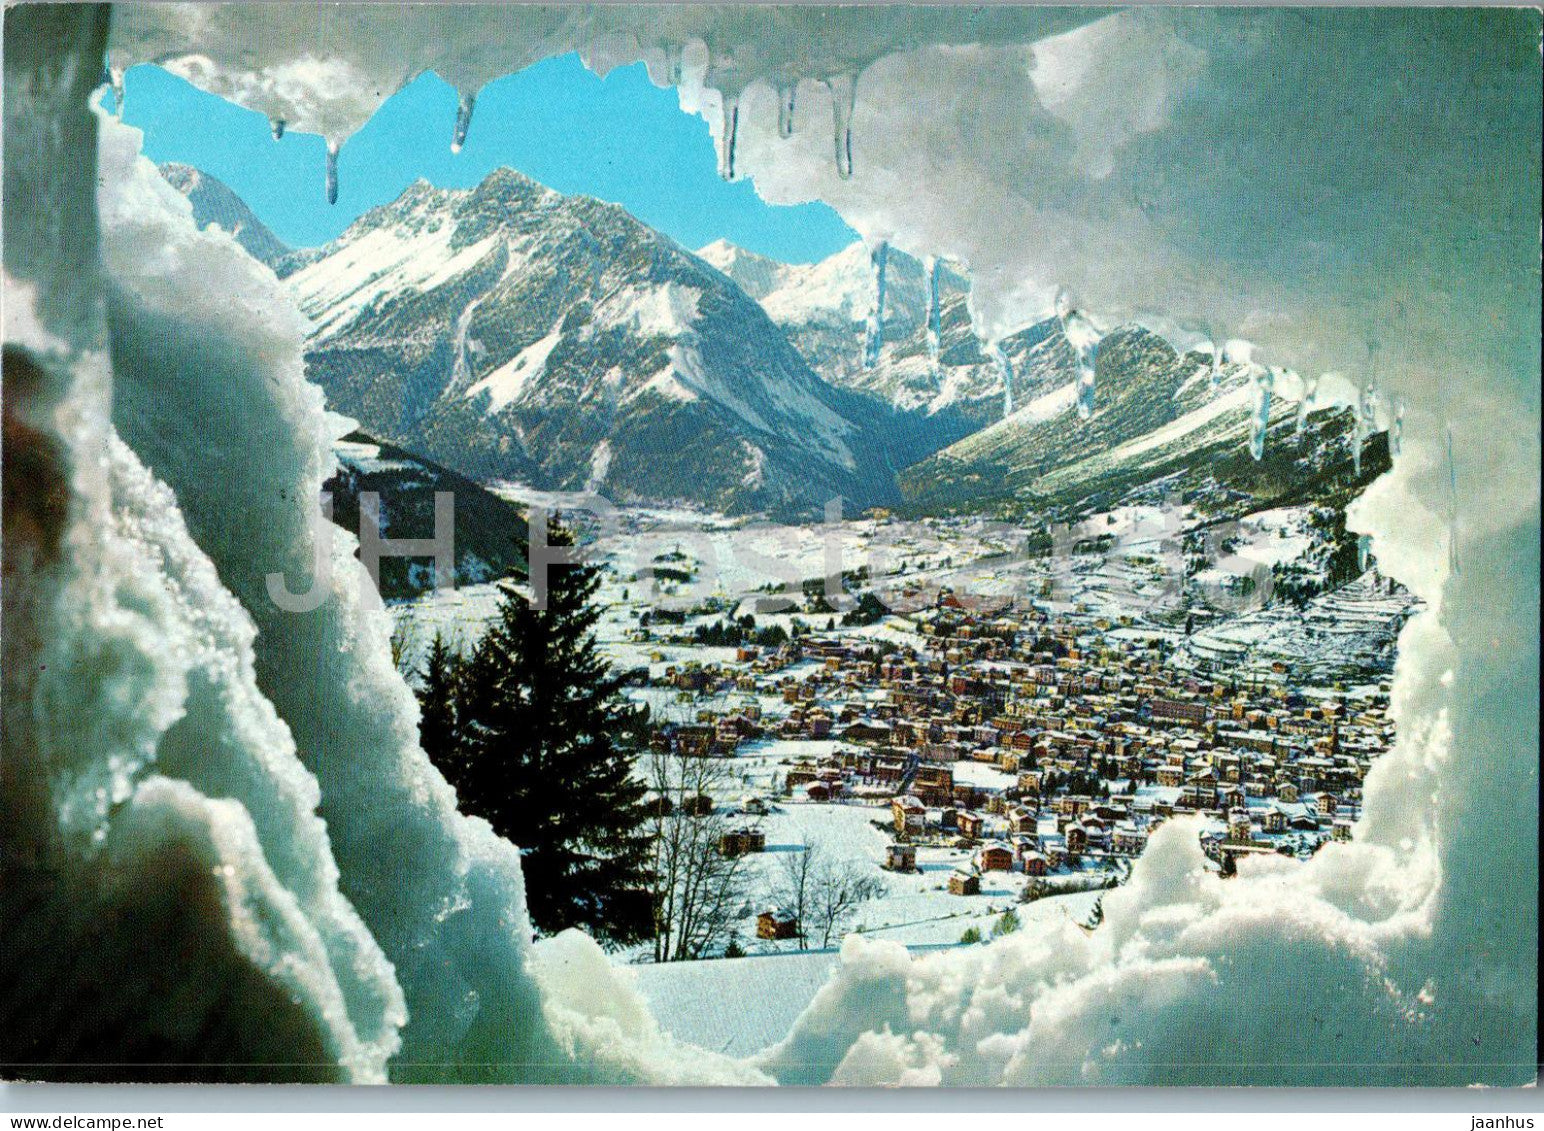 Bormio 1225 m - Panorama invernale - 285 - 1984 - Italy - used - JH Postcards